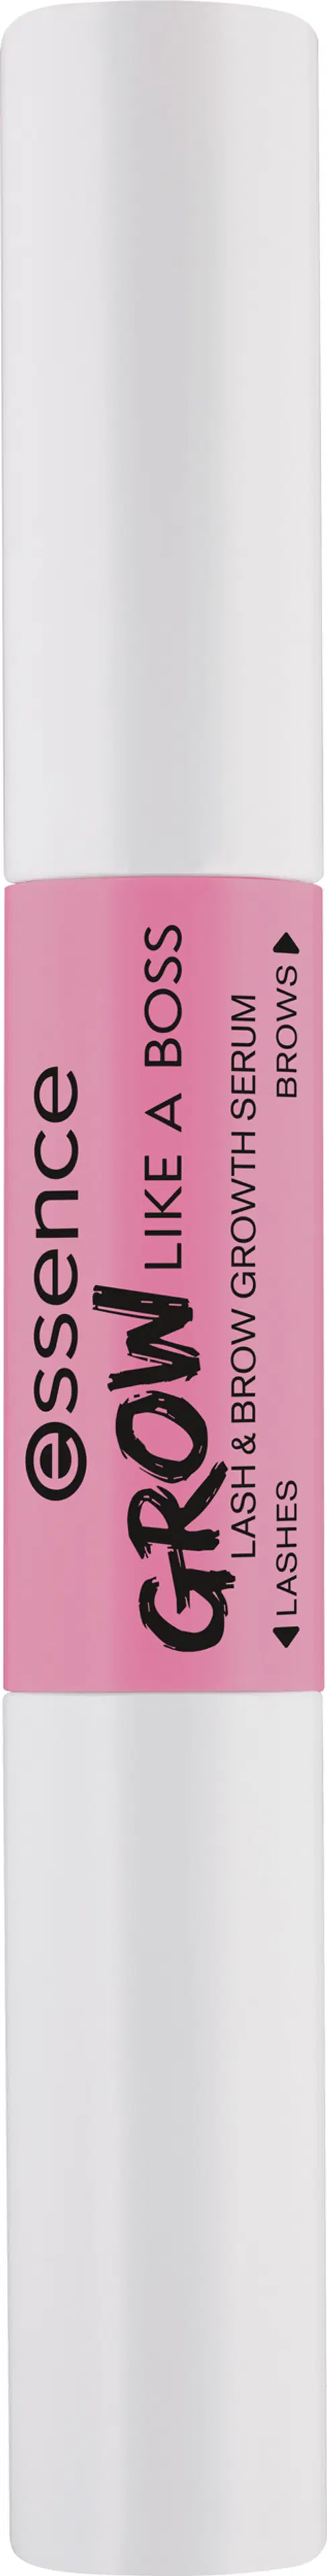 essence GROW LIKE A BOSS LASH & BROW GROWTH SERUM ripsi- & kulmaseerumi 6 ml